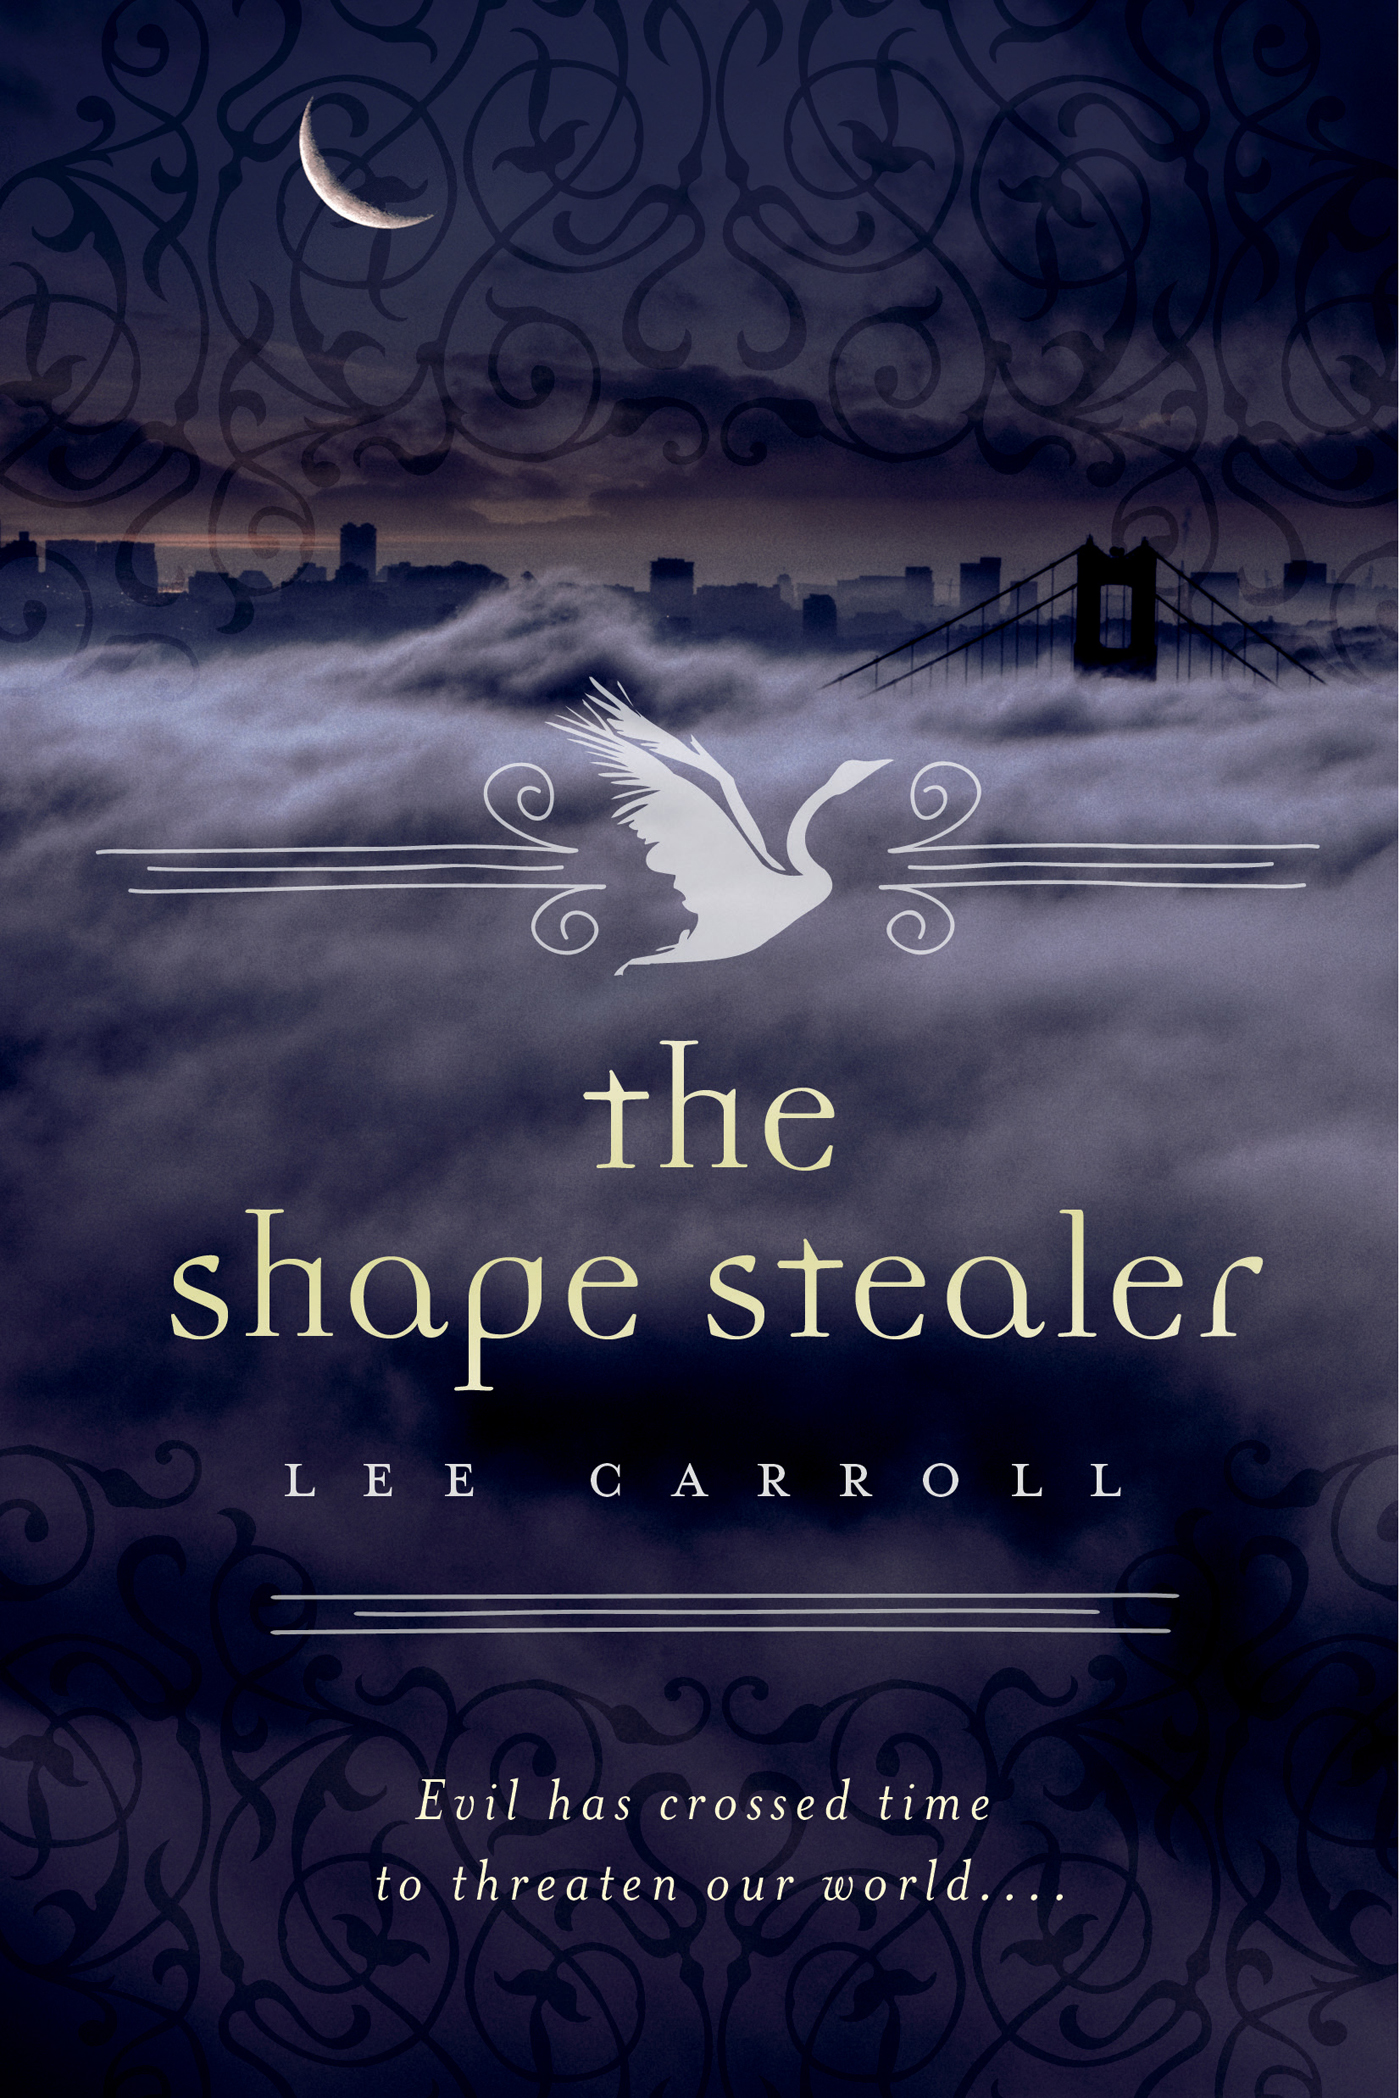 The Shape Stealer by Lee Carroll